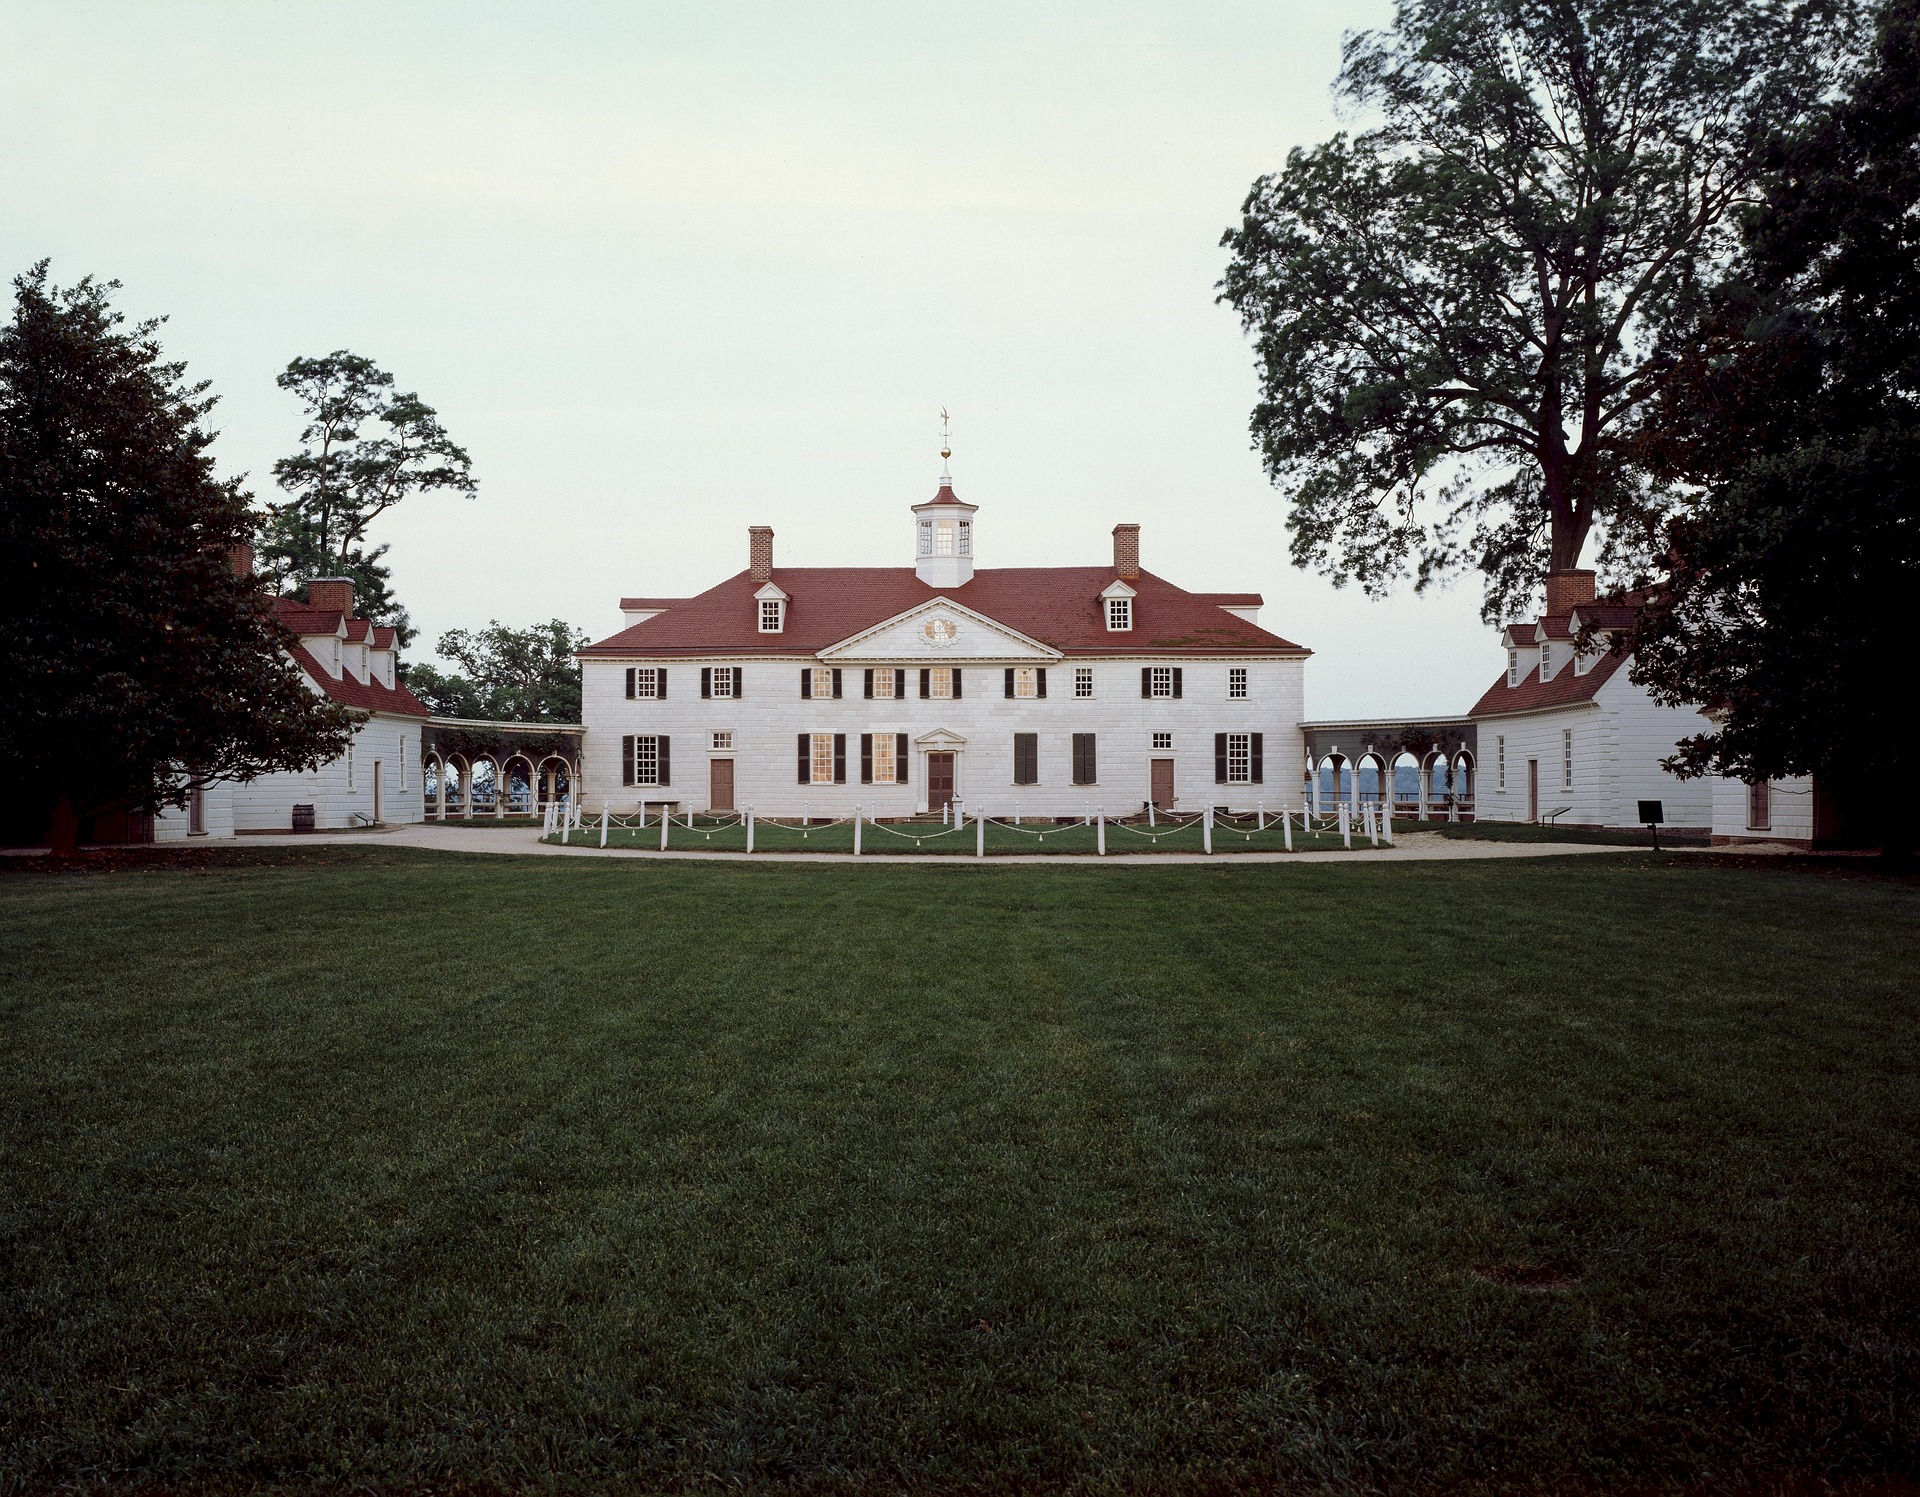 George Washington's home on Mount Vernon